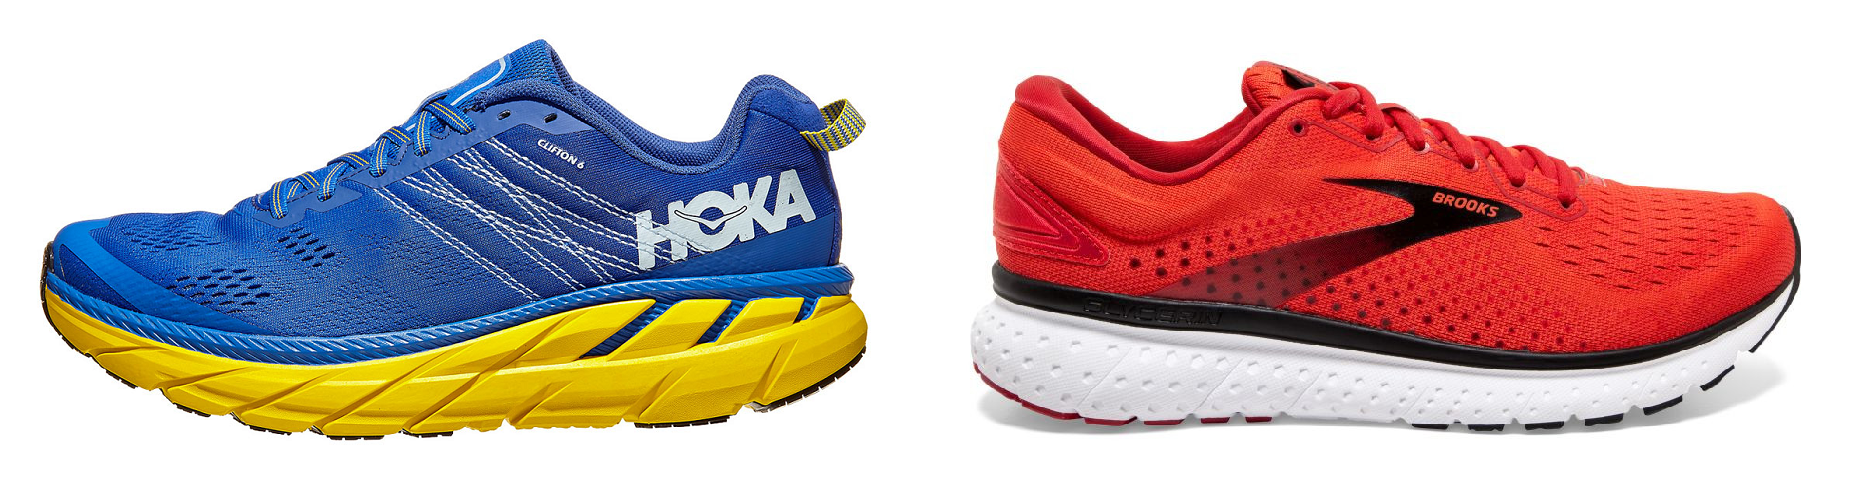 hoka vs brooks running shoes